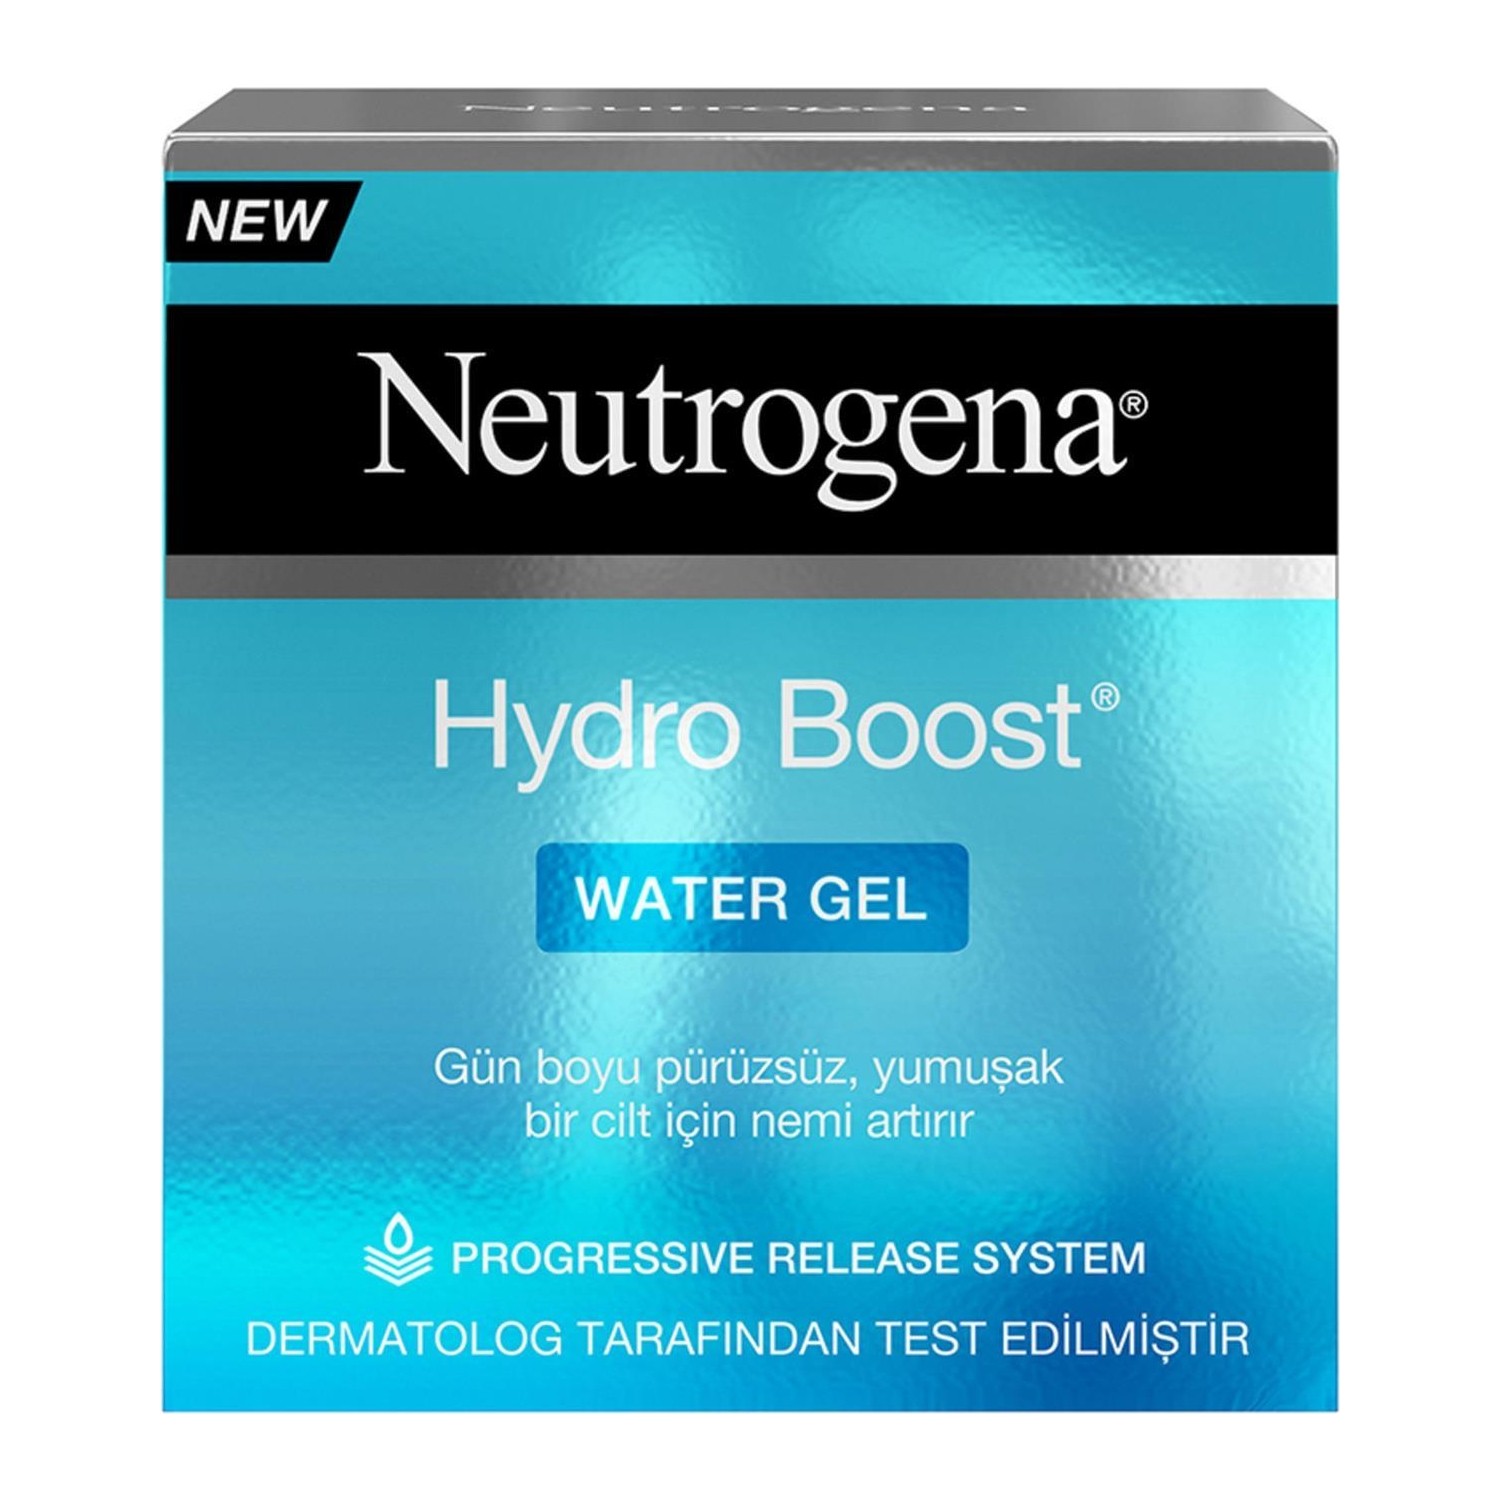 Крем увлажняющий Neutrogena Hydro Boost Water Gel для нормальной кожи, 50 мл крем увлажняющий neutrogena hydro boost water gel для нормальной кожи 2 упаковки по 50 мл